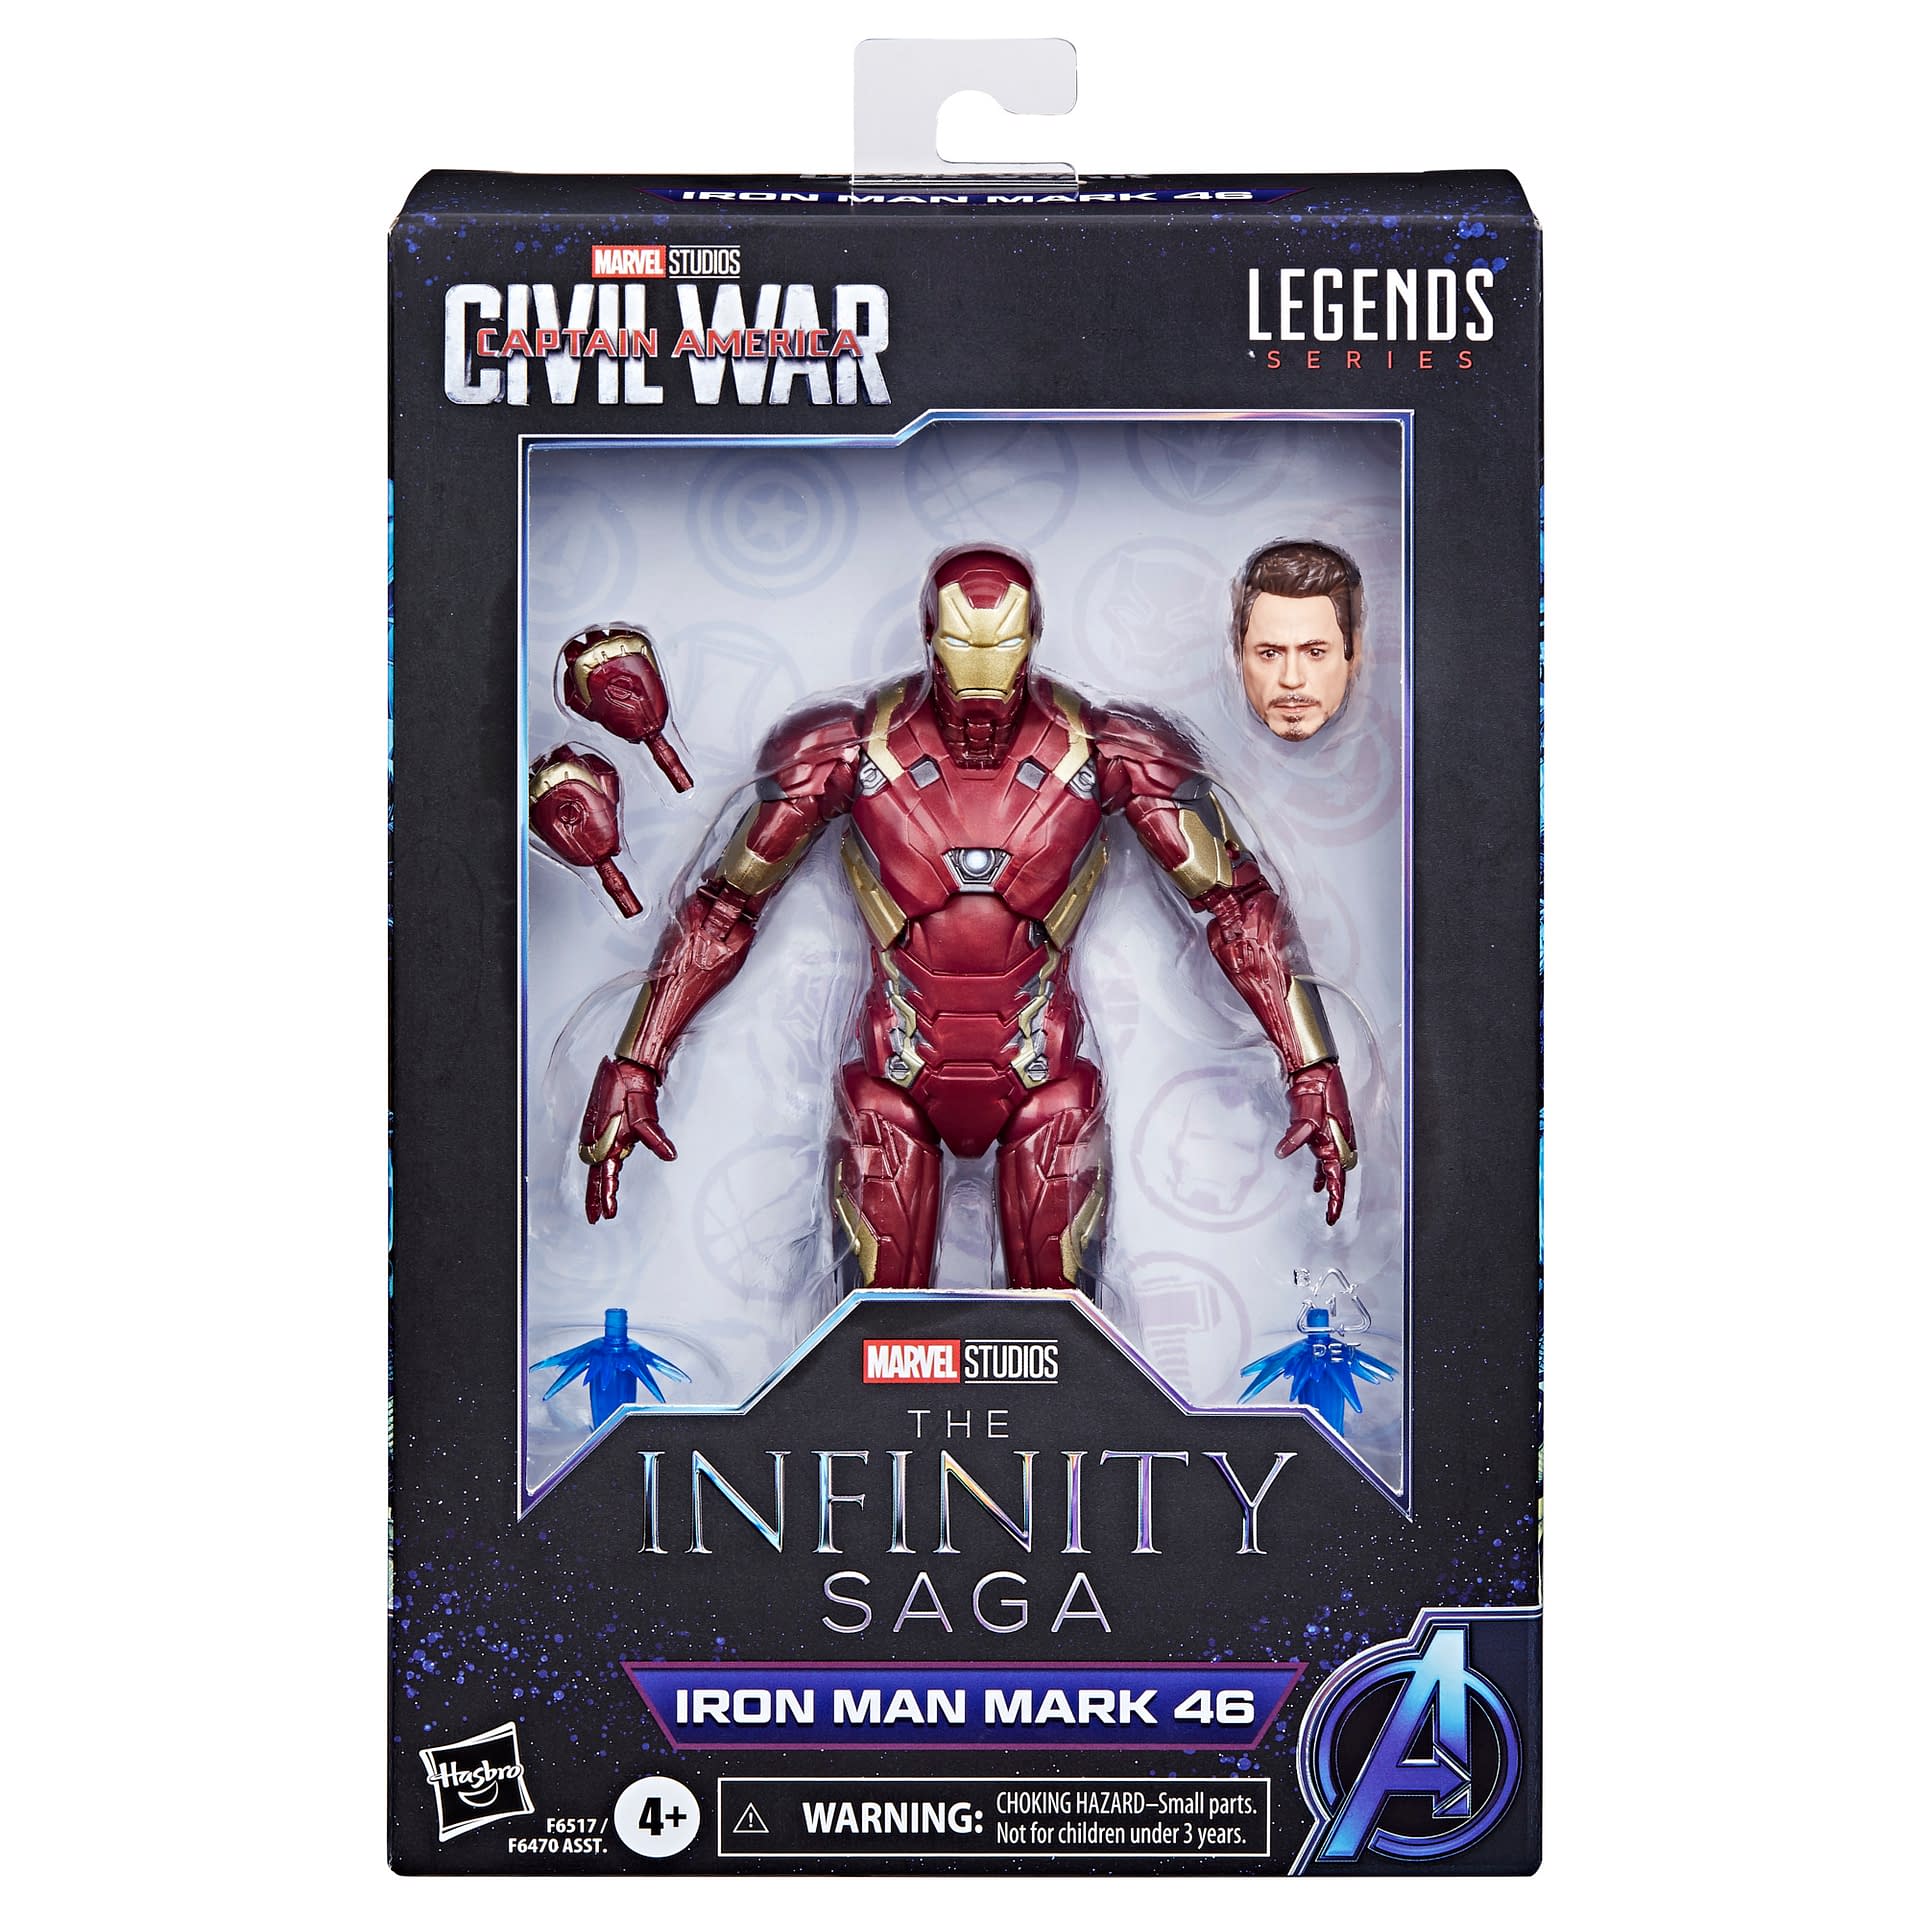 Iron Man MK 42 - Figurine comics - Marvel production